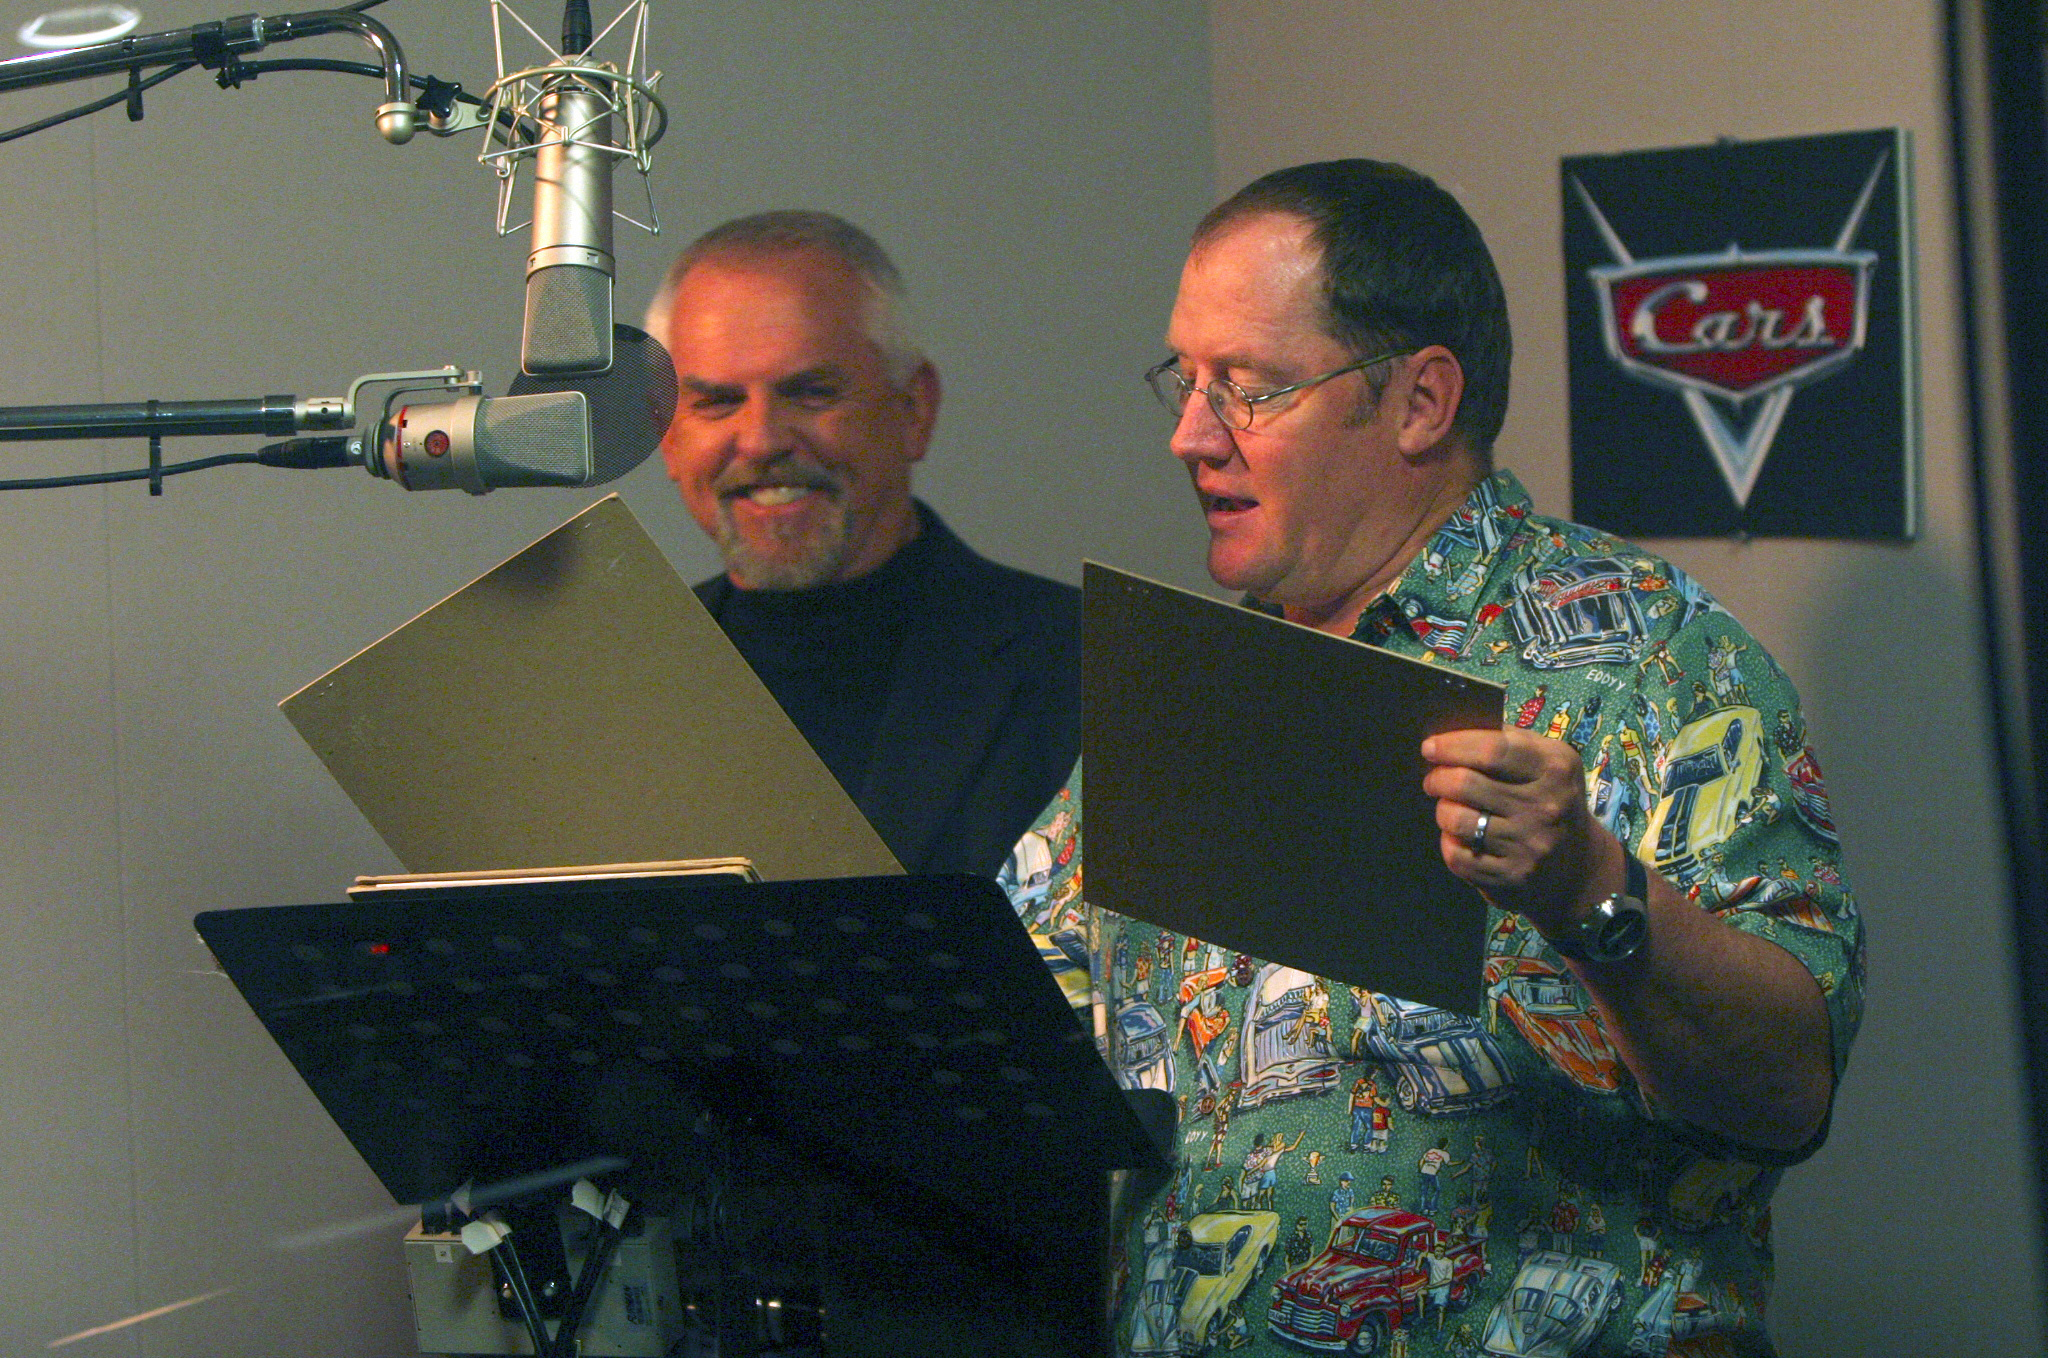 Still of John Ratzenberger and John Lasseter in Ratai (2006)